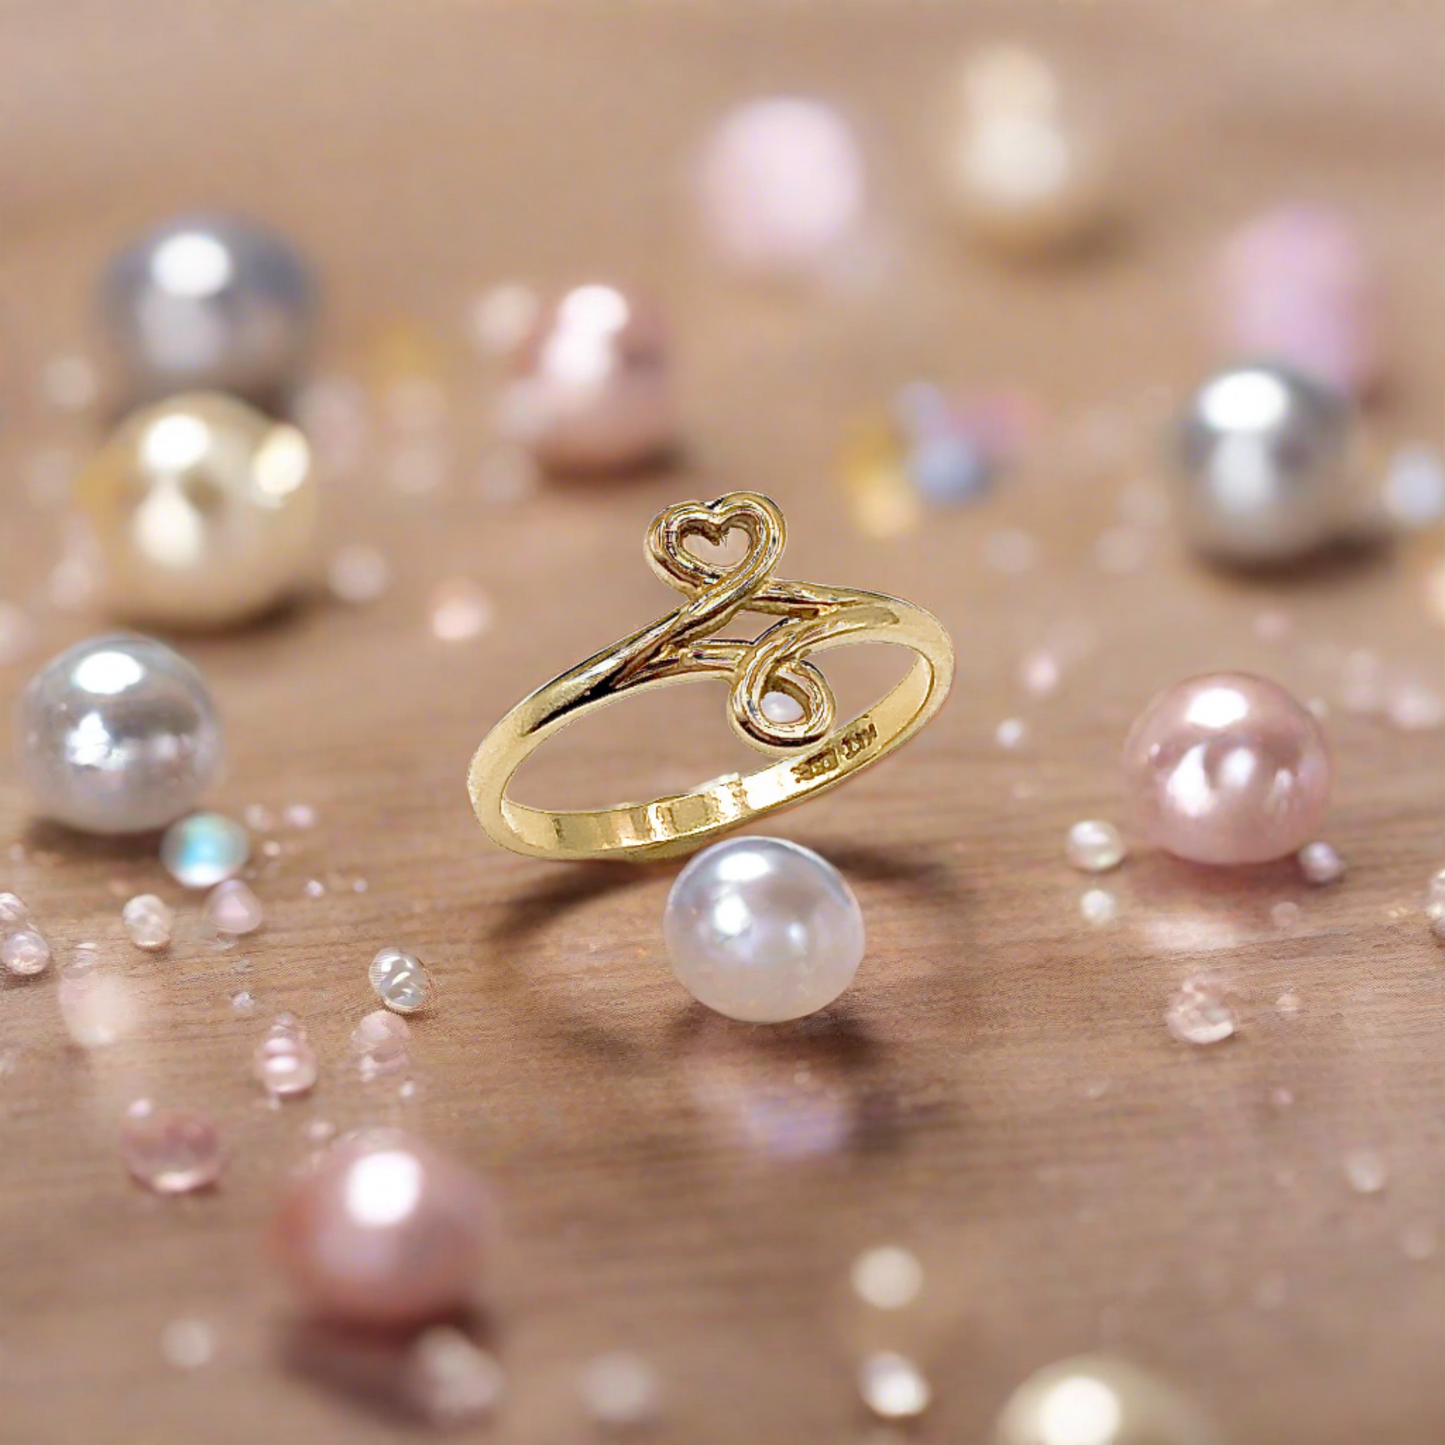 14k Gold Ring, Women's Beautiful Petite Mini Heart Half Infinity Design 14k Gold Ring - Blingschlingers Discount Estate Jewelry